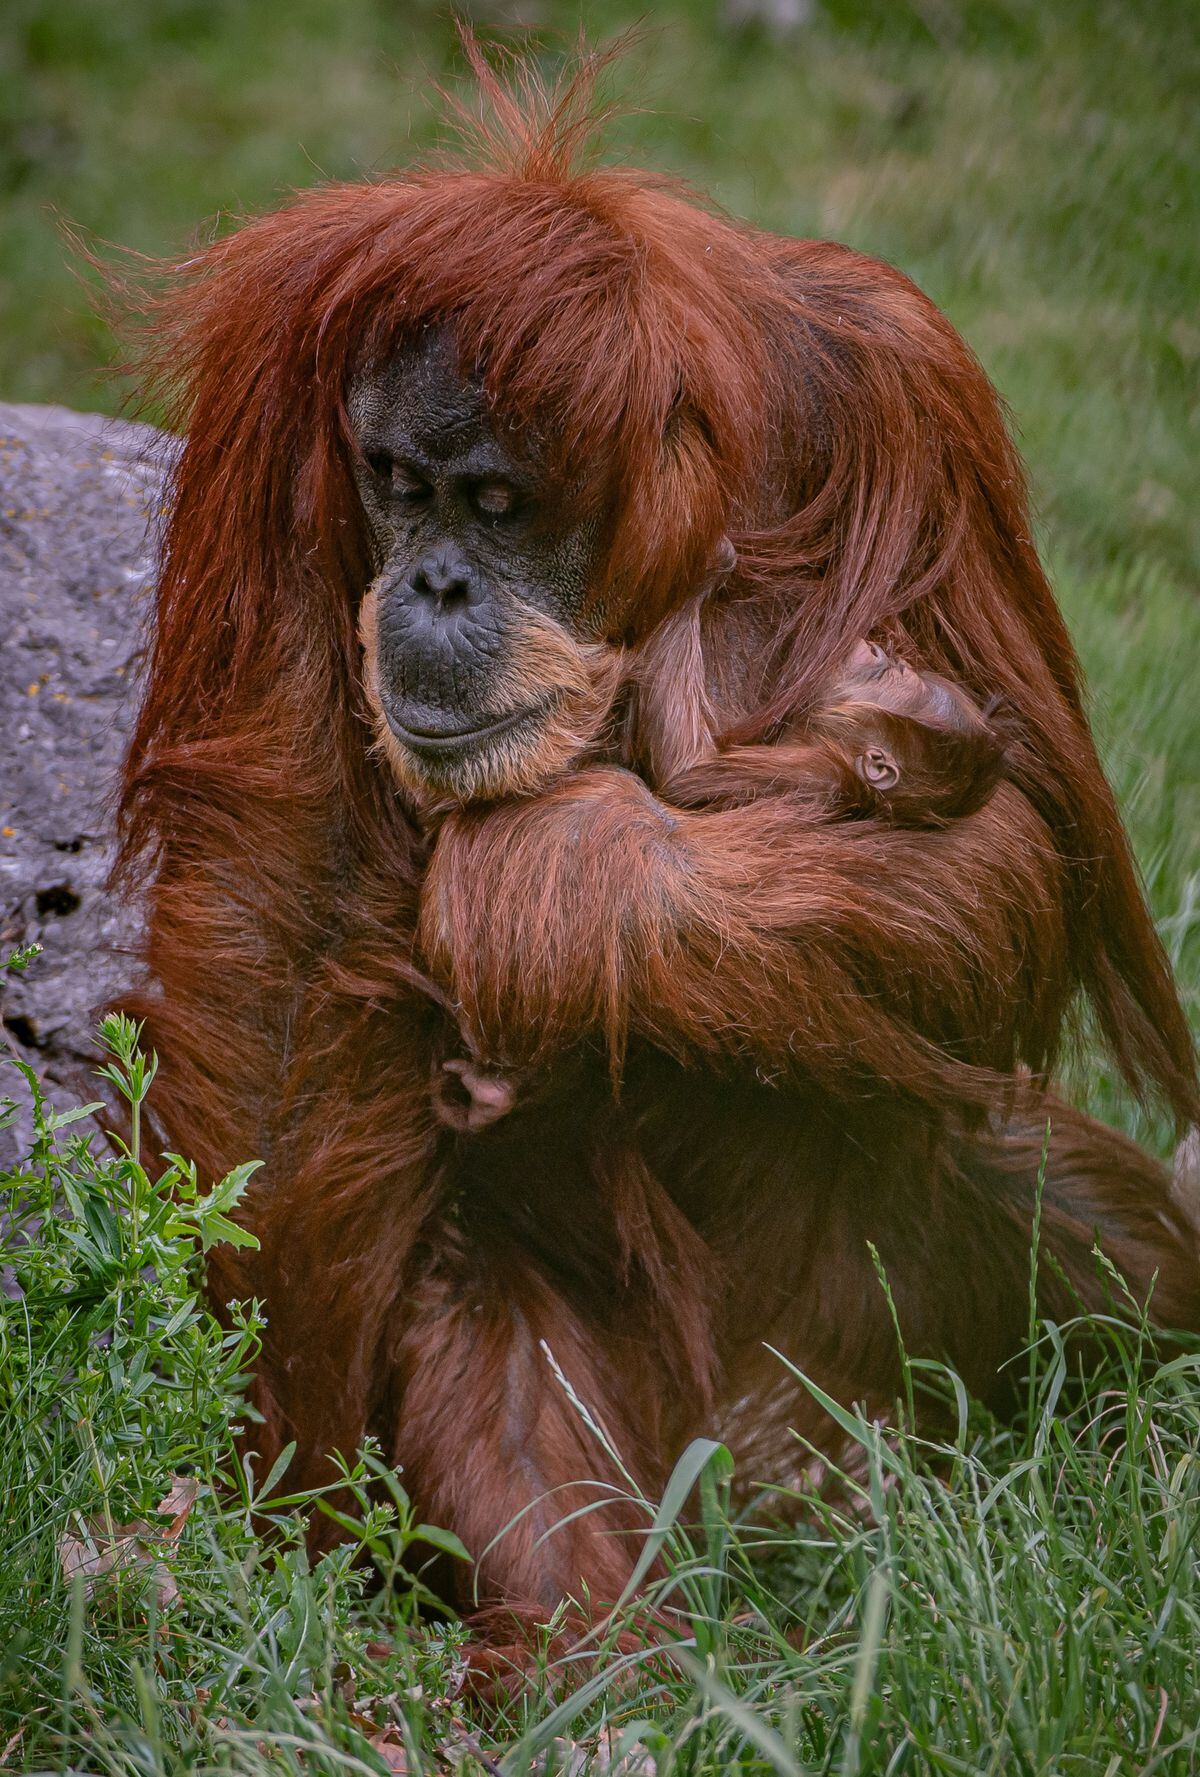 Dudley zoo's new orangutan arrival with mum, Emma.